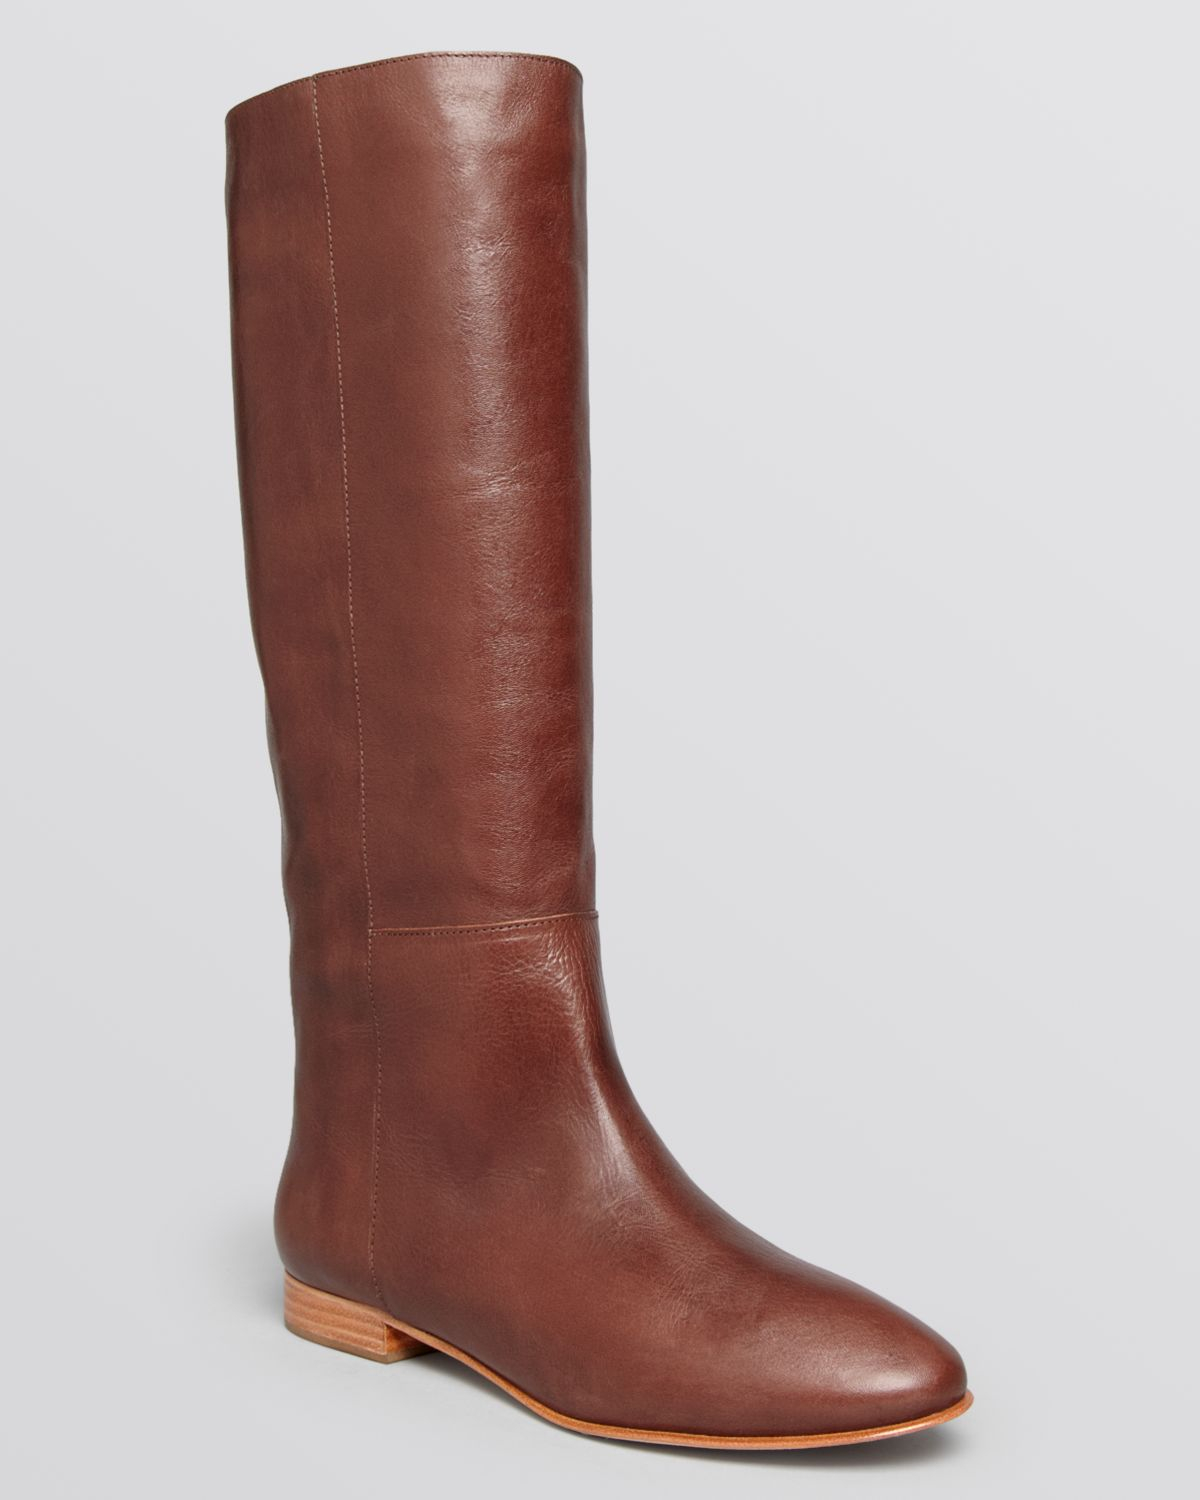 Loeffler Randall Tall Flat Riding Boots - Marit in Chestnut (Brown) - Lyst